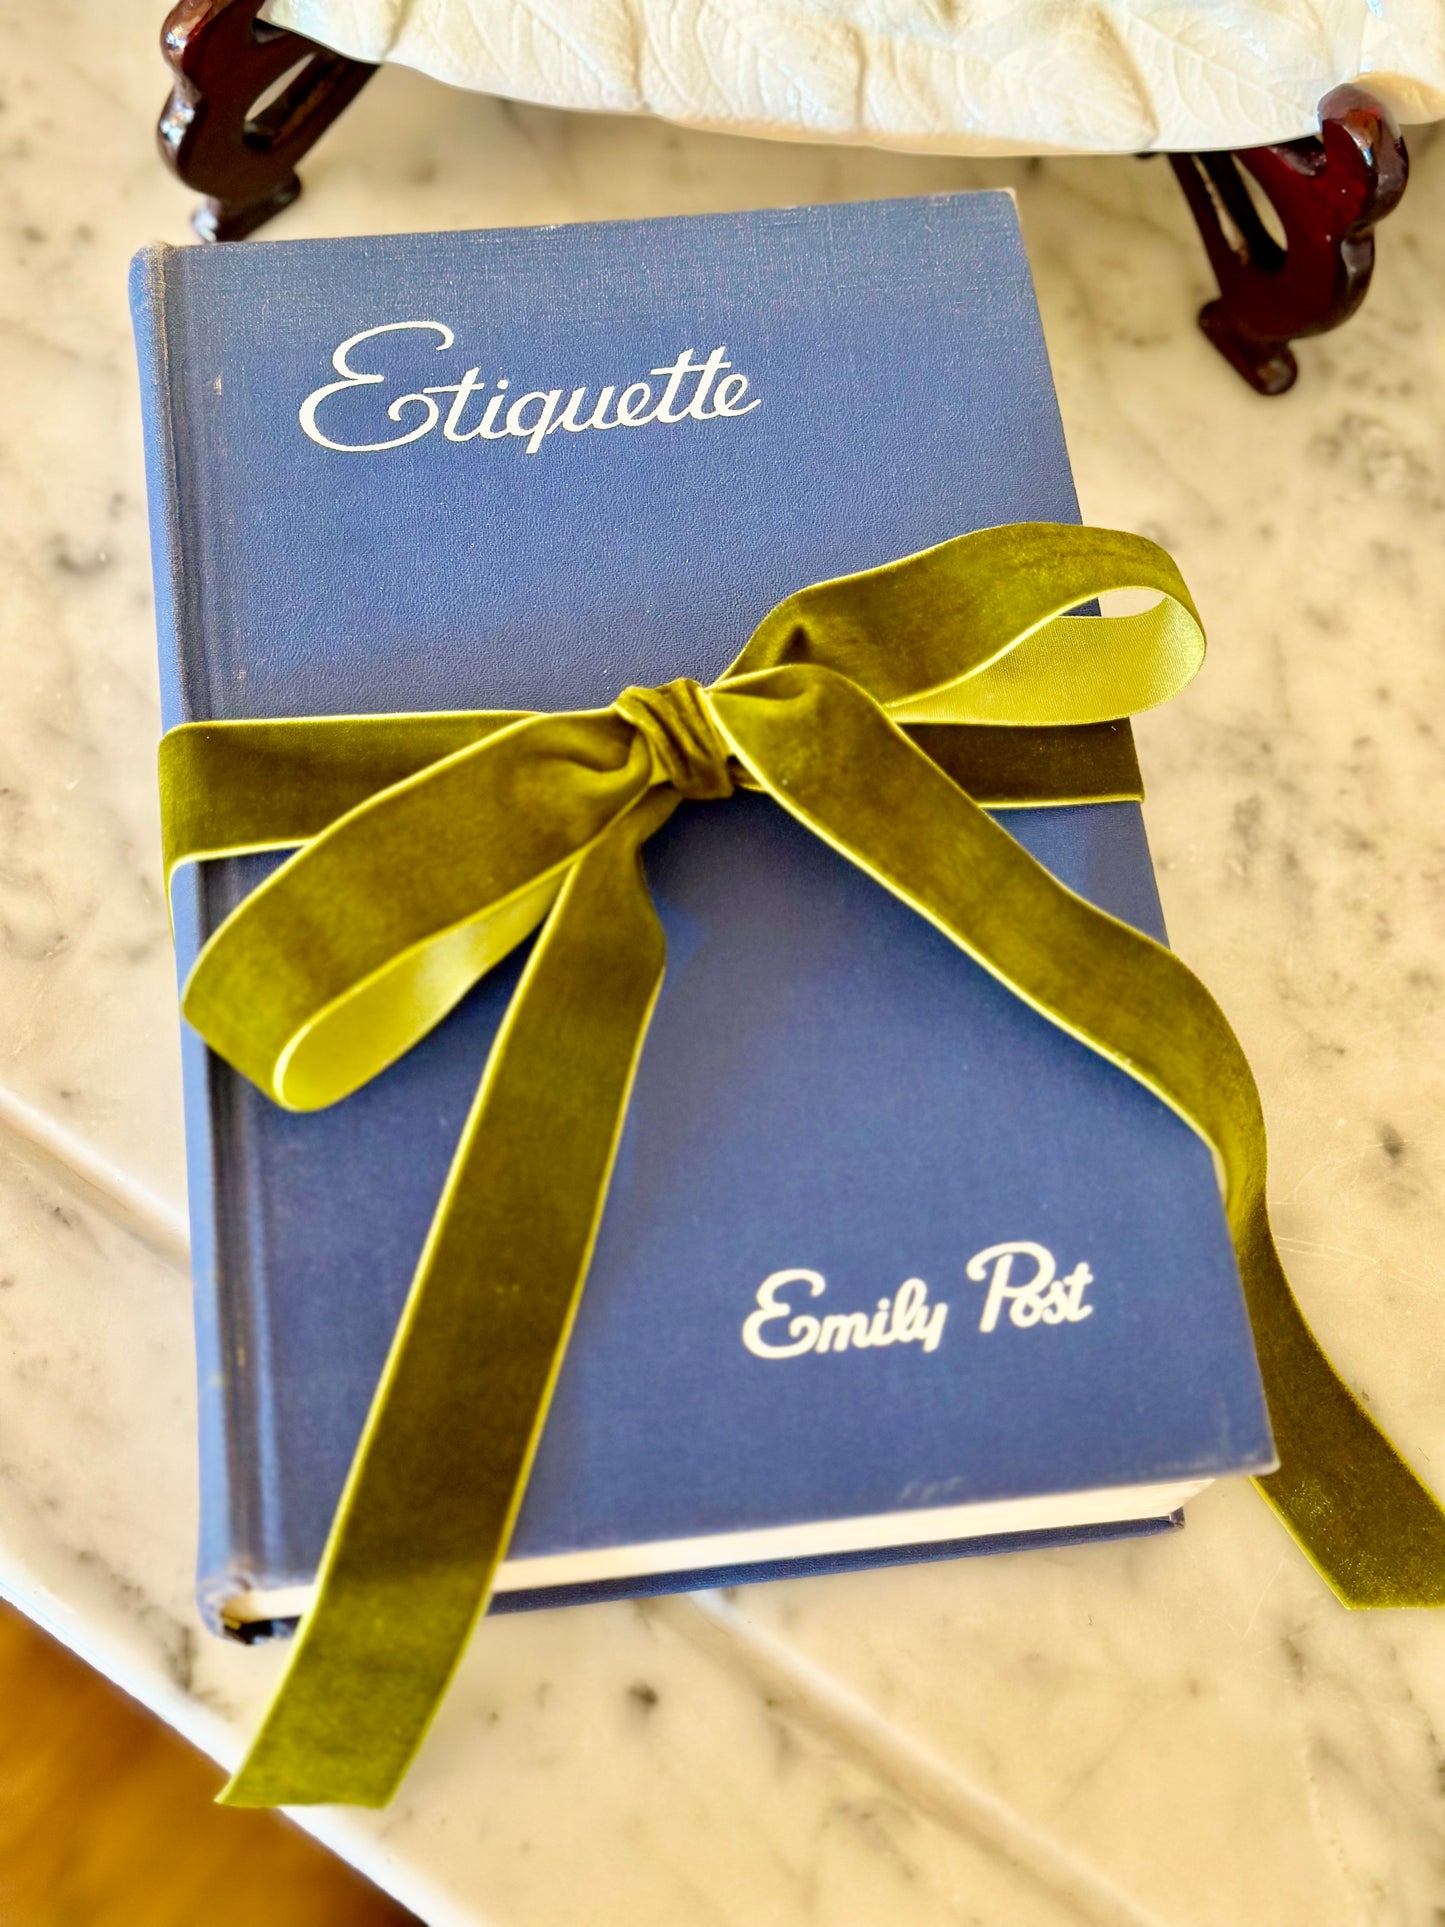 Vintage ‘Etiquette’ Book by Emily Post